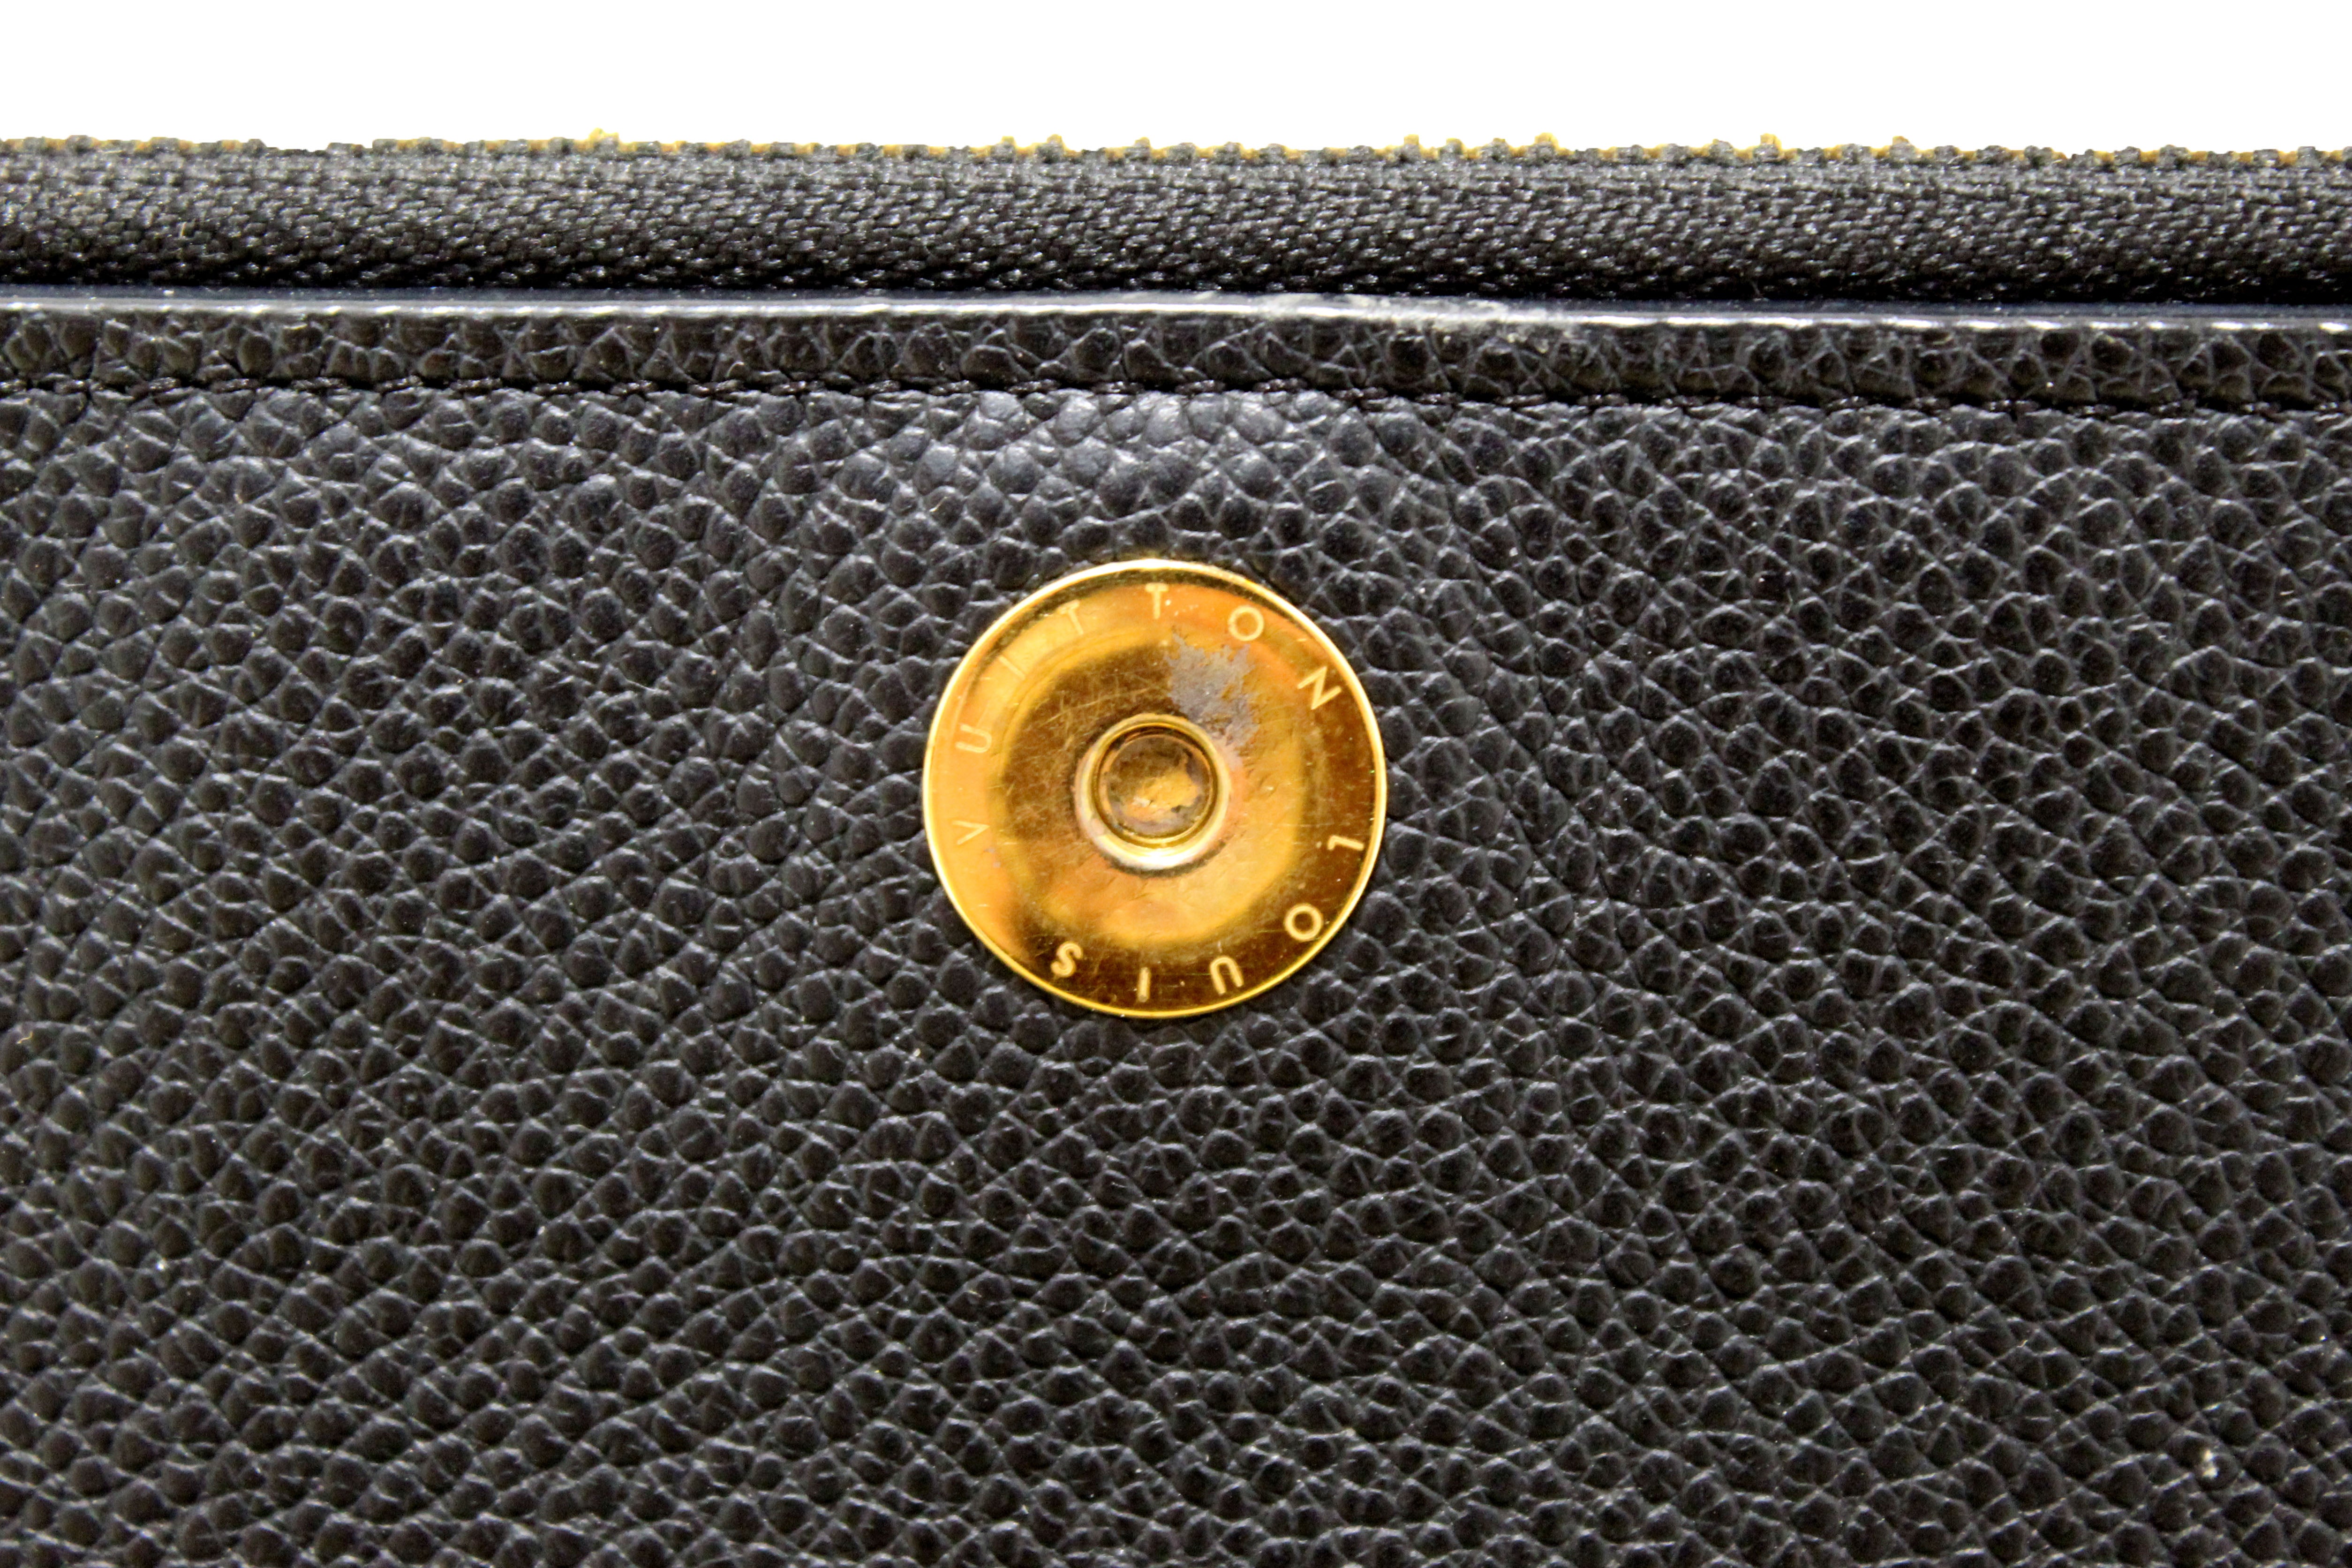 Louis Vuitton Adele wallet in Empreinte NoirNot on US website